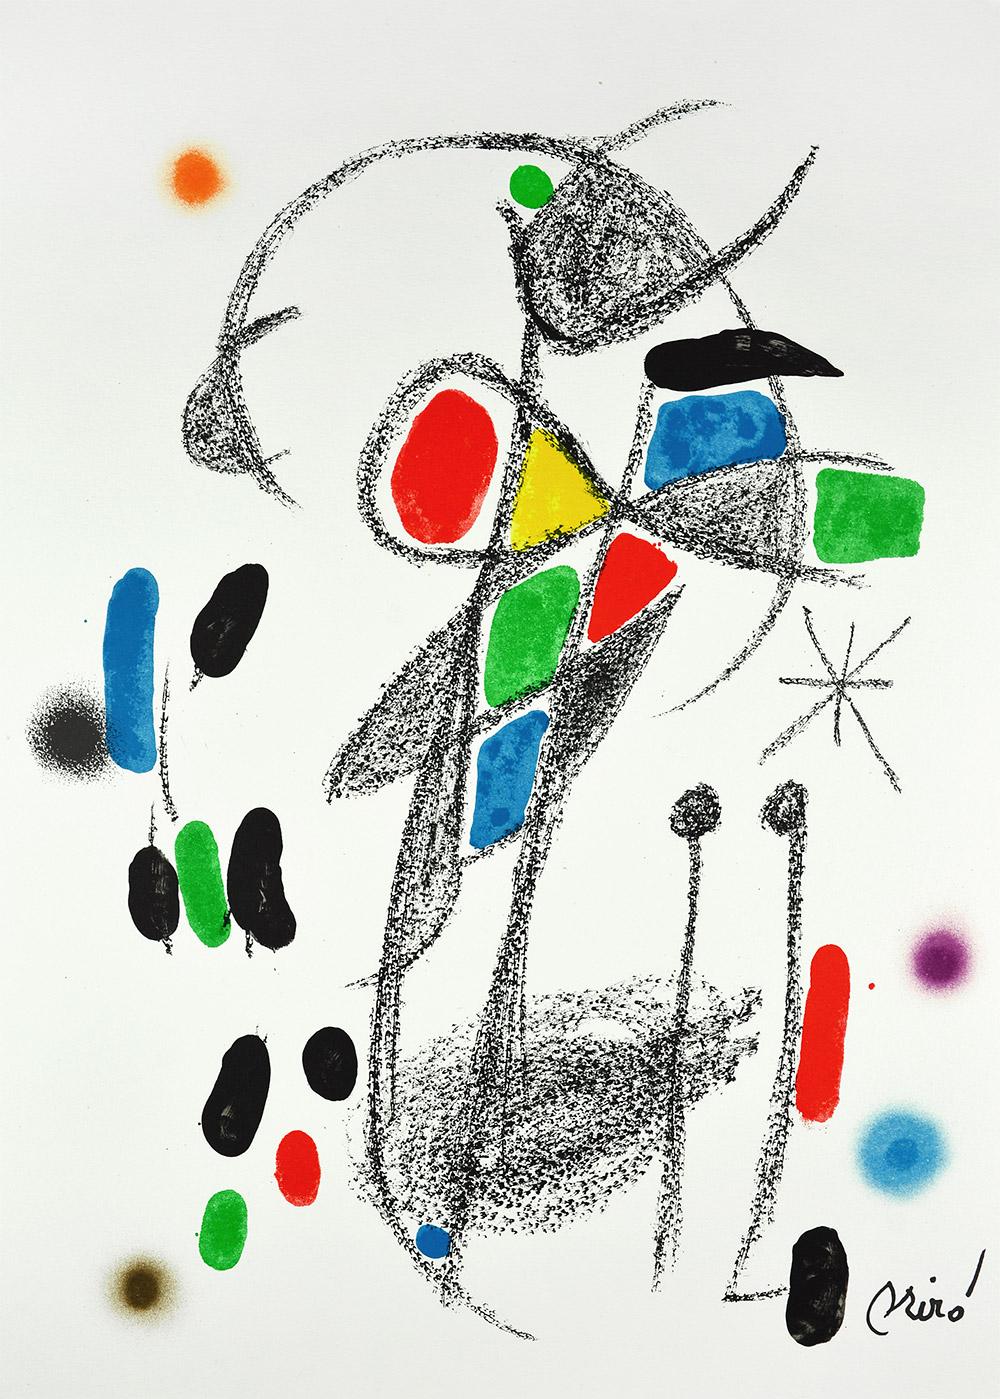 Joan Miró - Maravillas con variaciones acrósticas en el jardín de Miró XVIII
Datum der Gründung: 1975
Medium: Lithographie auf Gvarro-Papier
Auflage: 1500
Größe: 49,5 x 35,5 cm
Beobachtungen: Lithographie auf Gvarro-Papierplatte signiert.